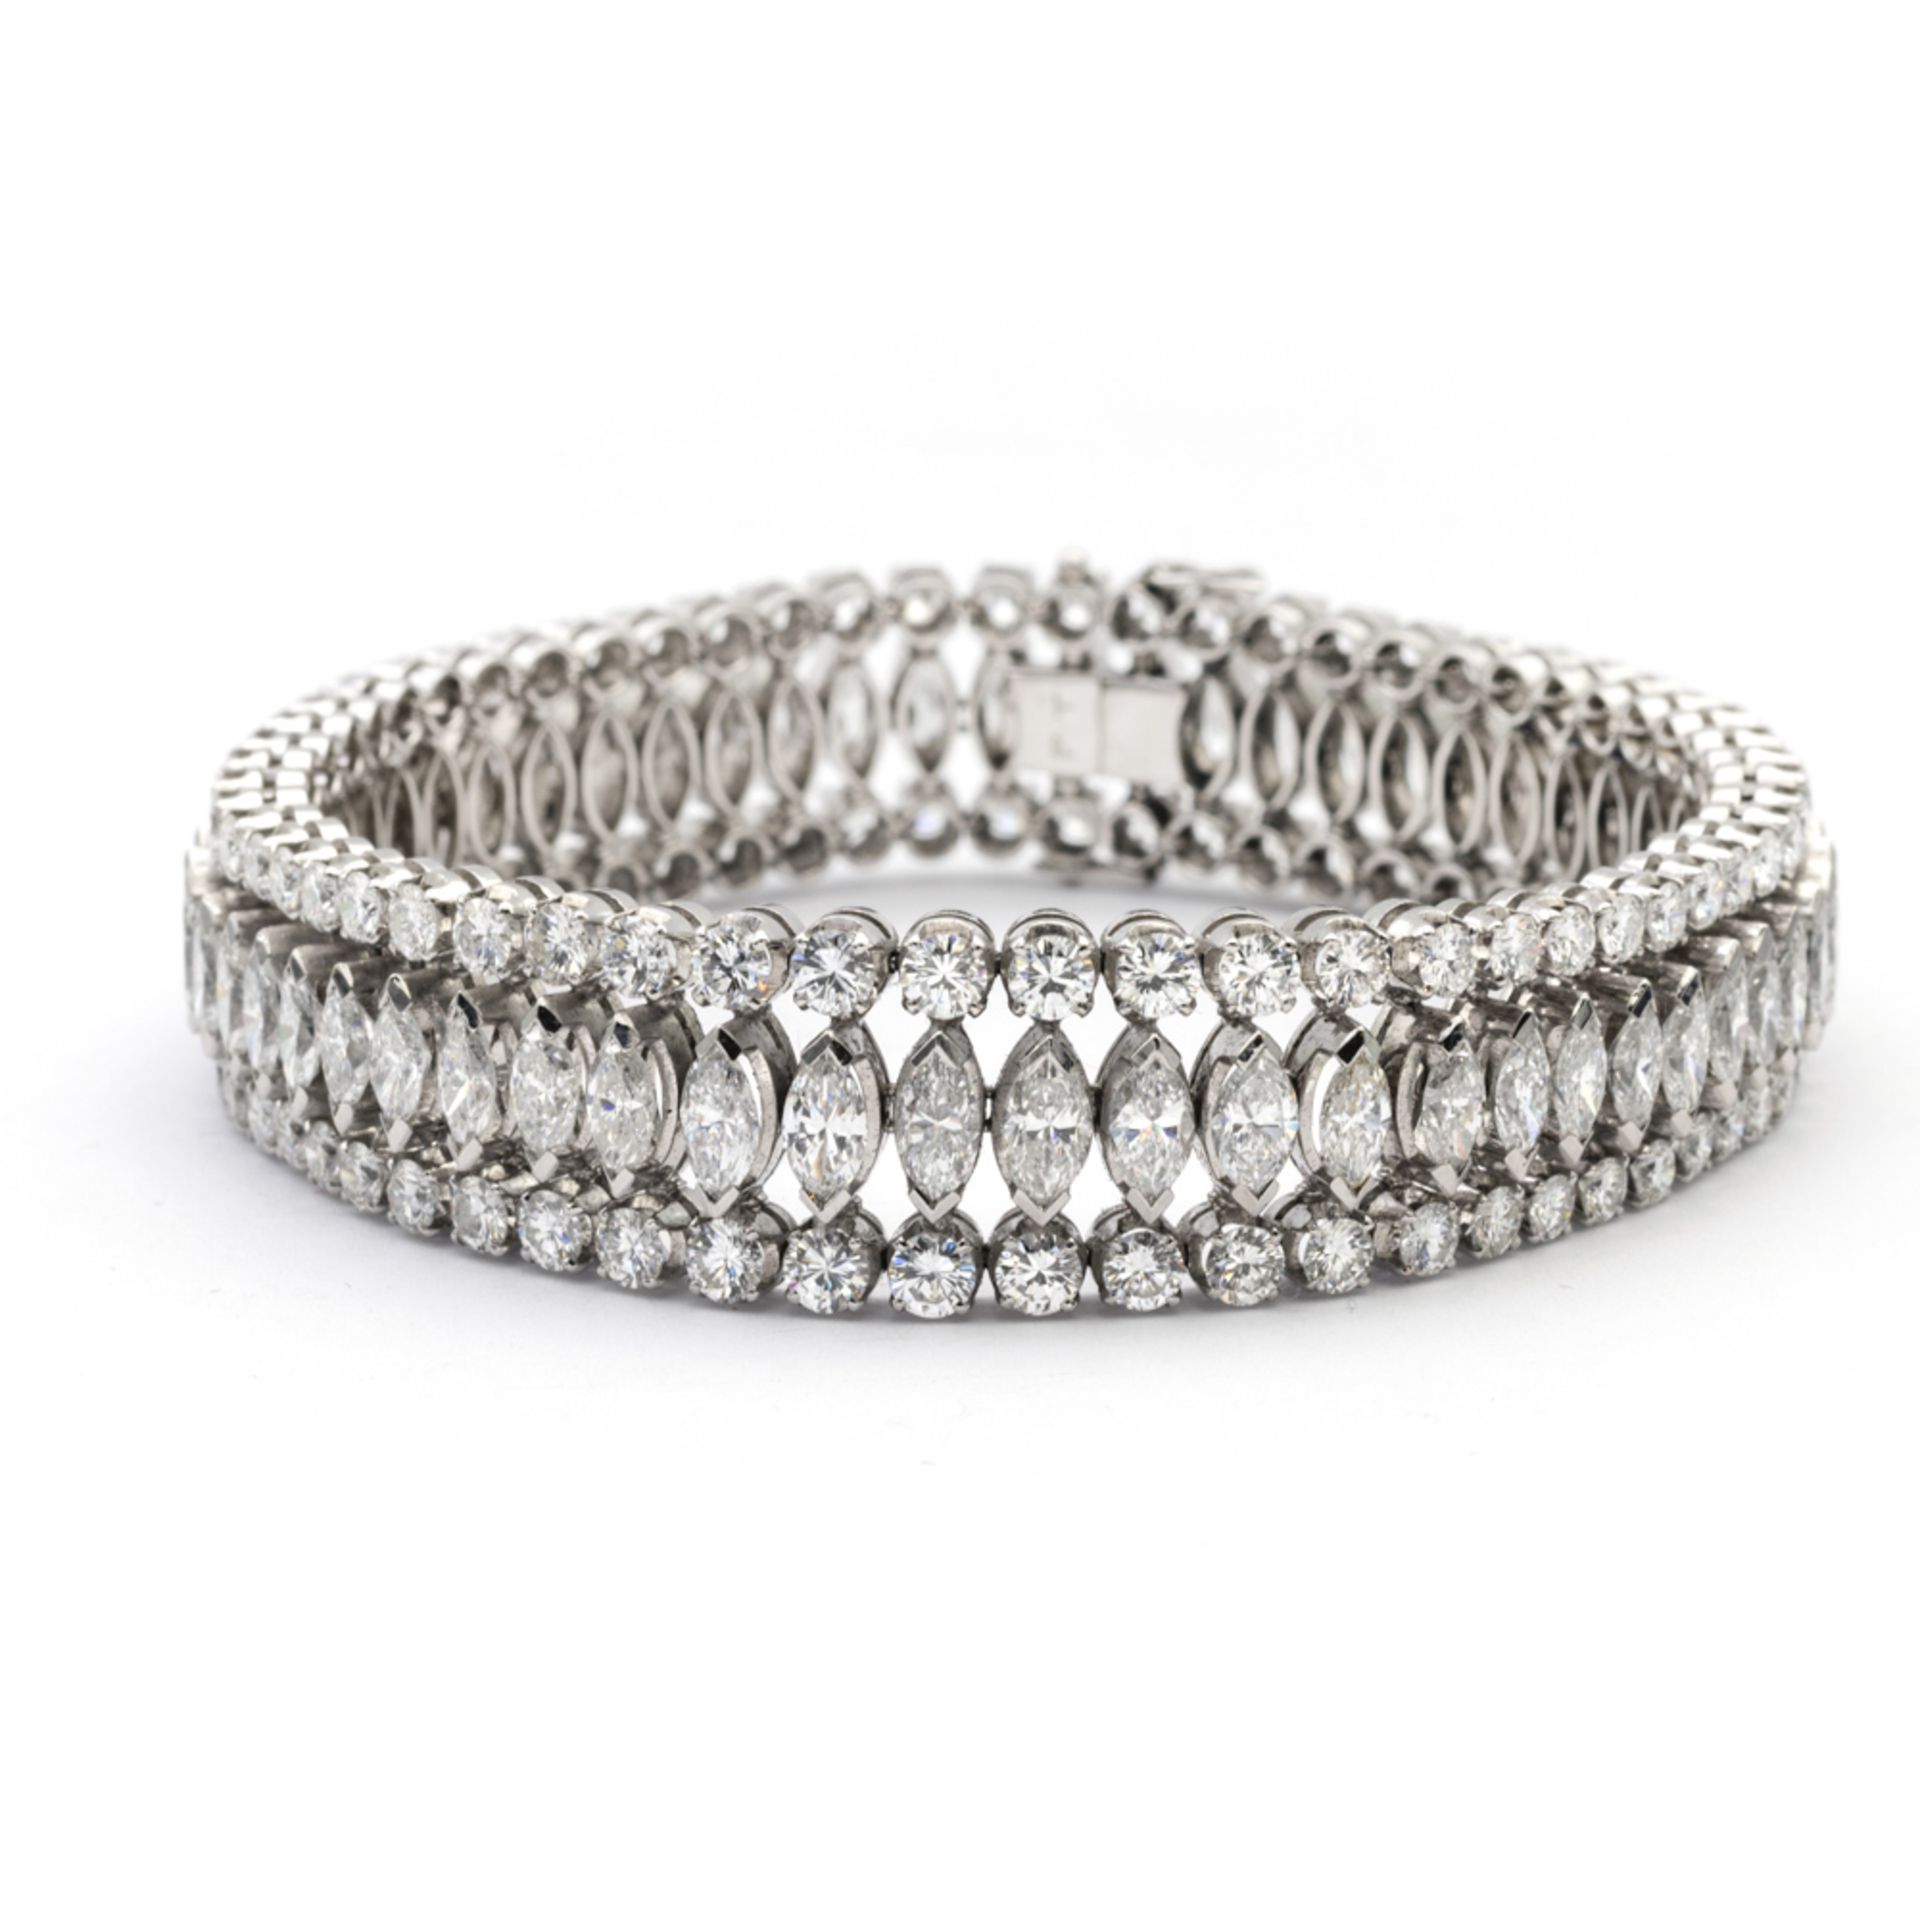 Platinum and diamond riviere bracelet